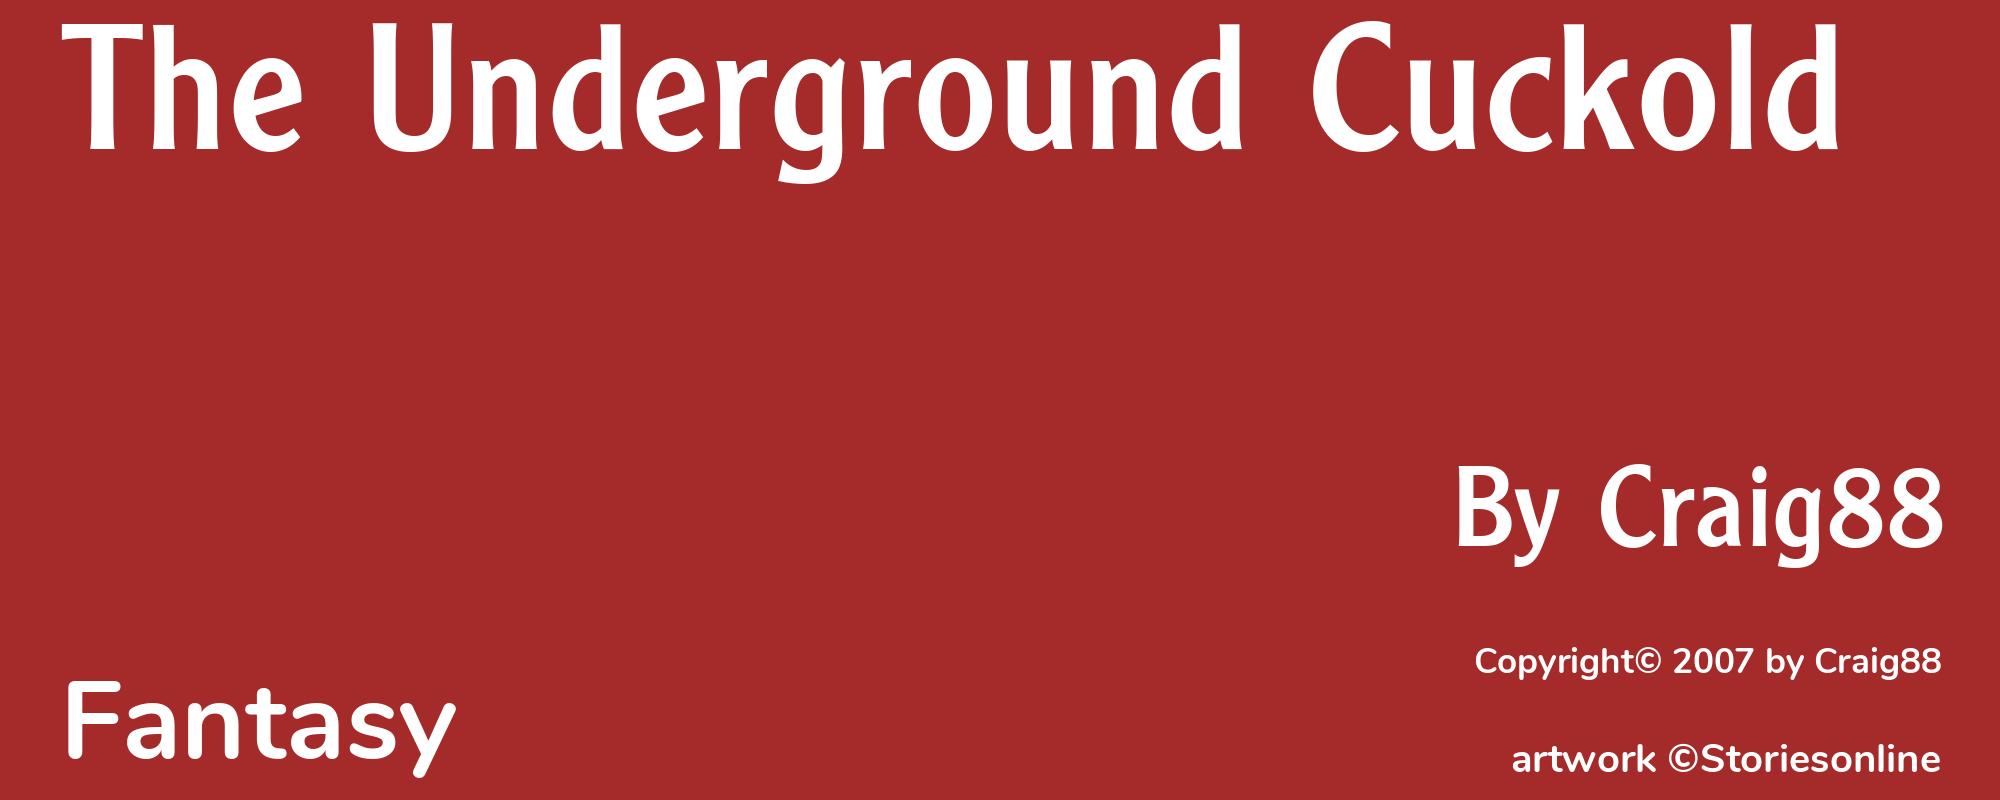 The Underground Cuckold - Cover